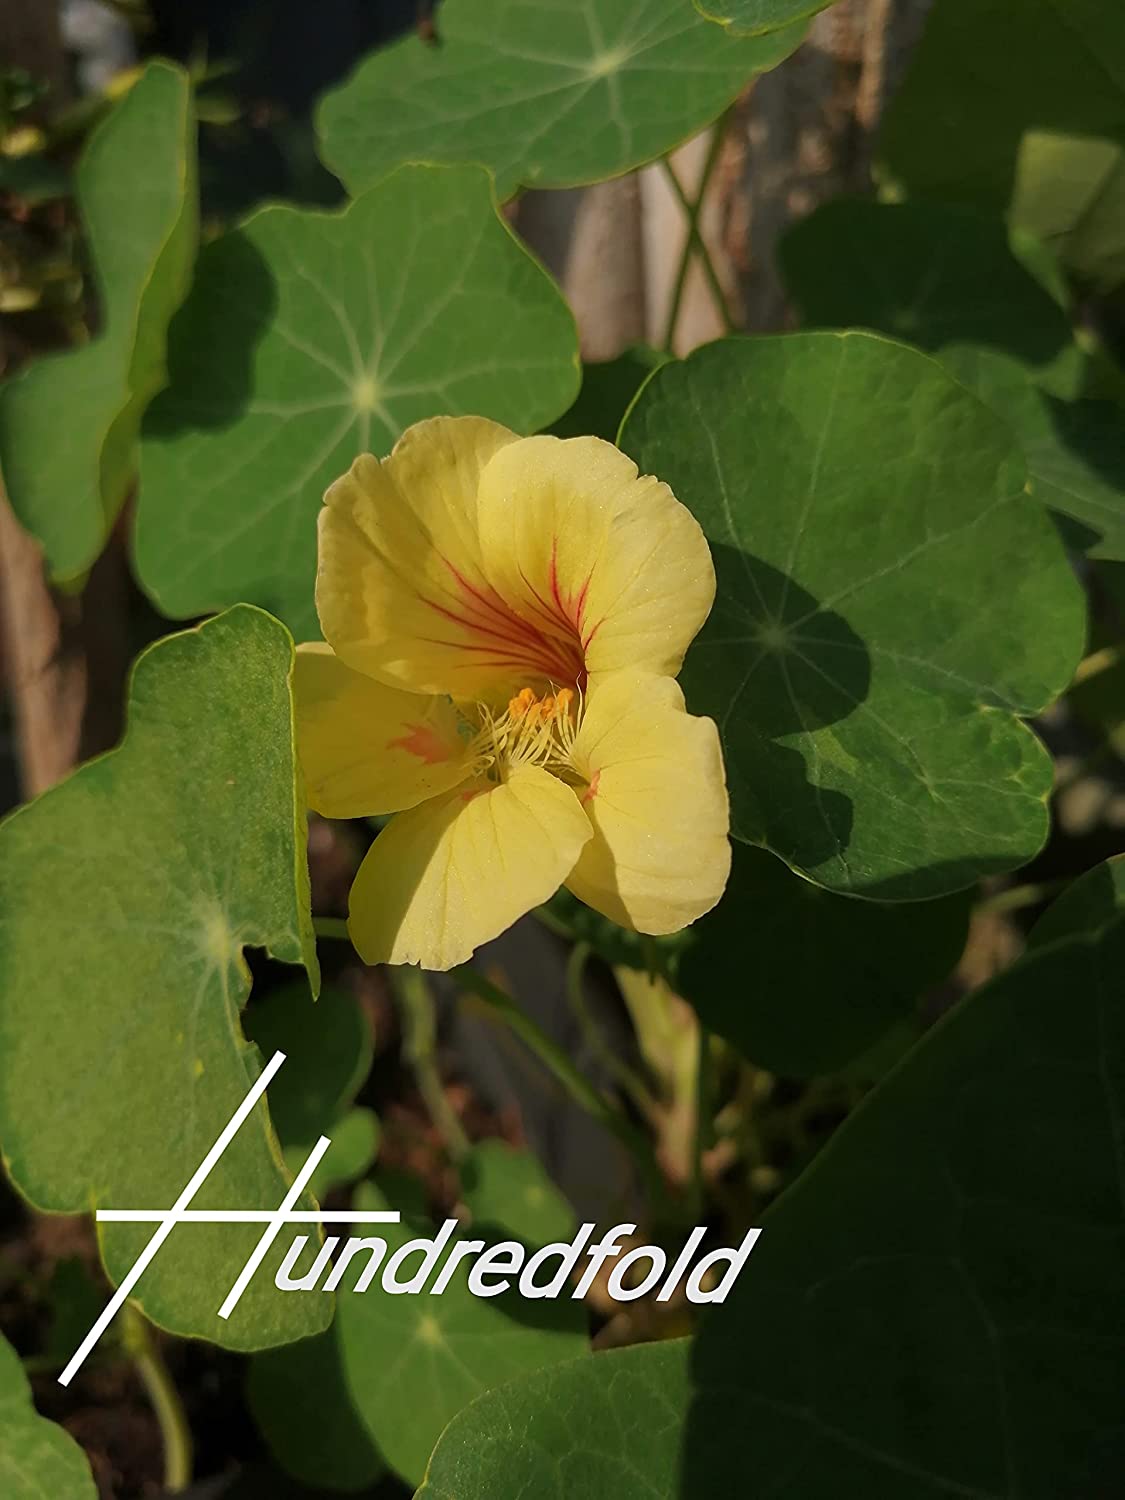 Hundredfold Jewel Mix Nasturtium 30 Seeds - Tropaeolum majus Bush Habit, Easily Grown, Edible Flower